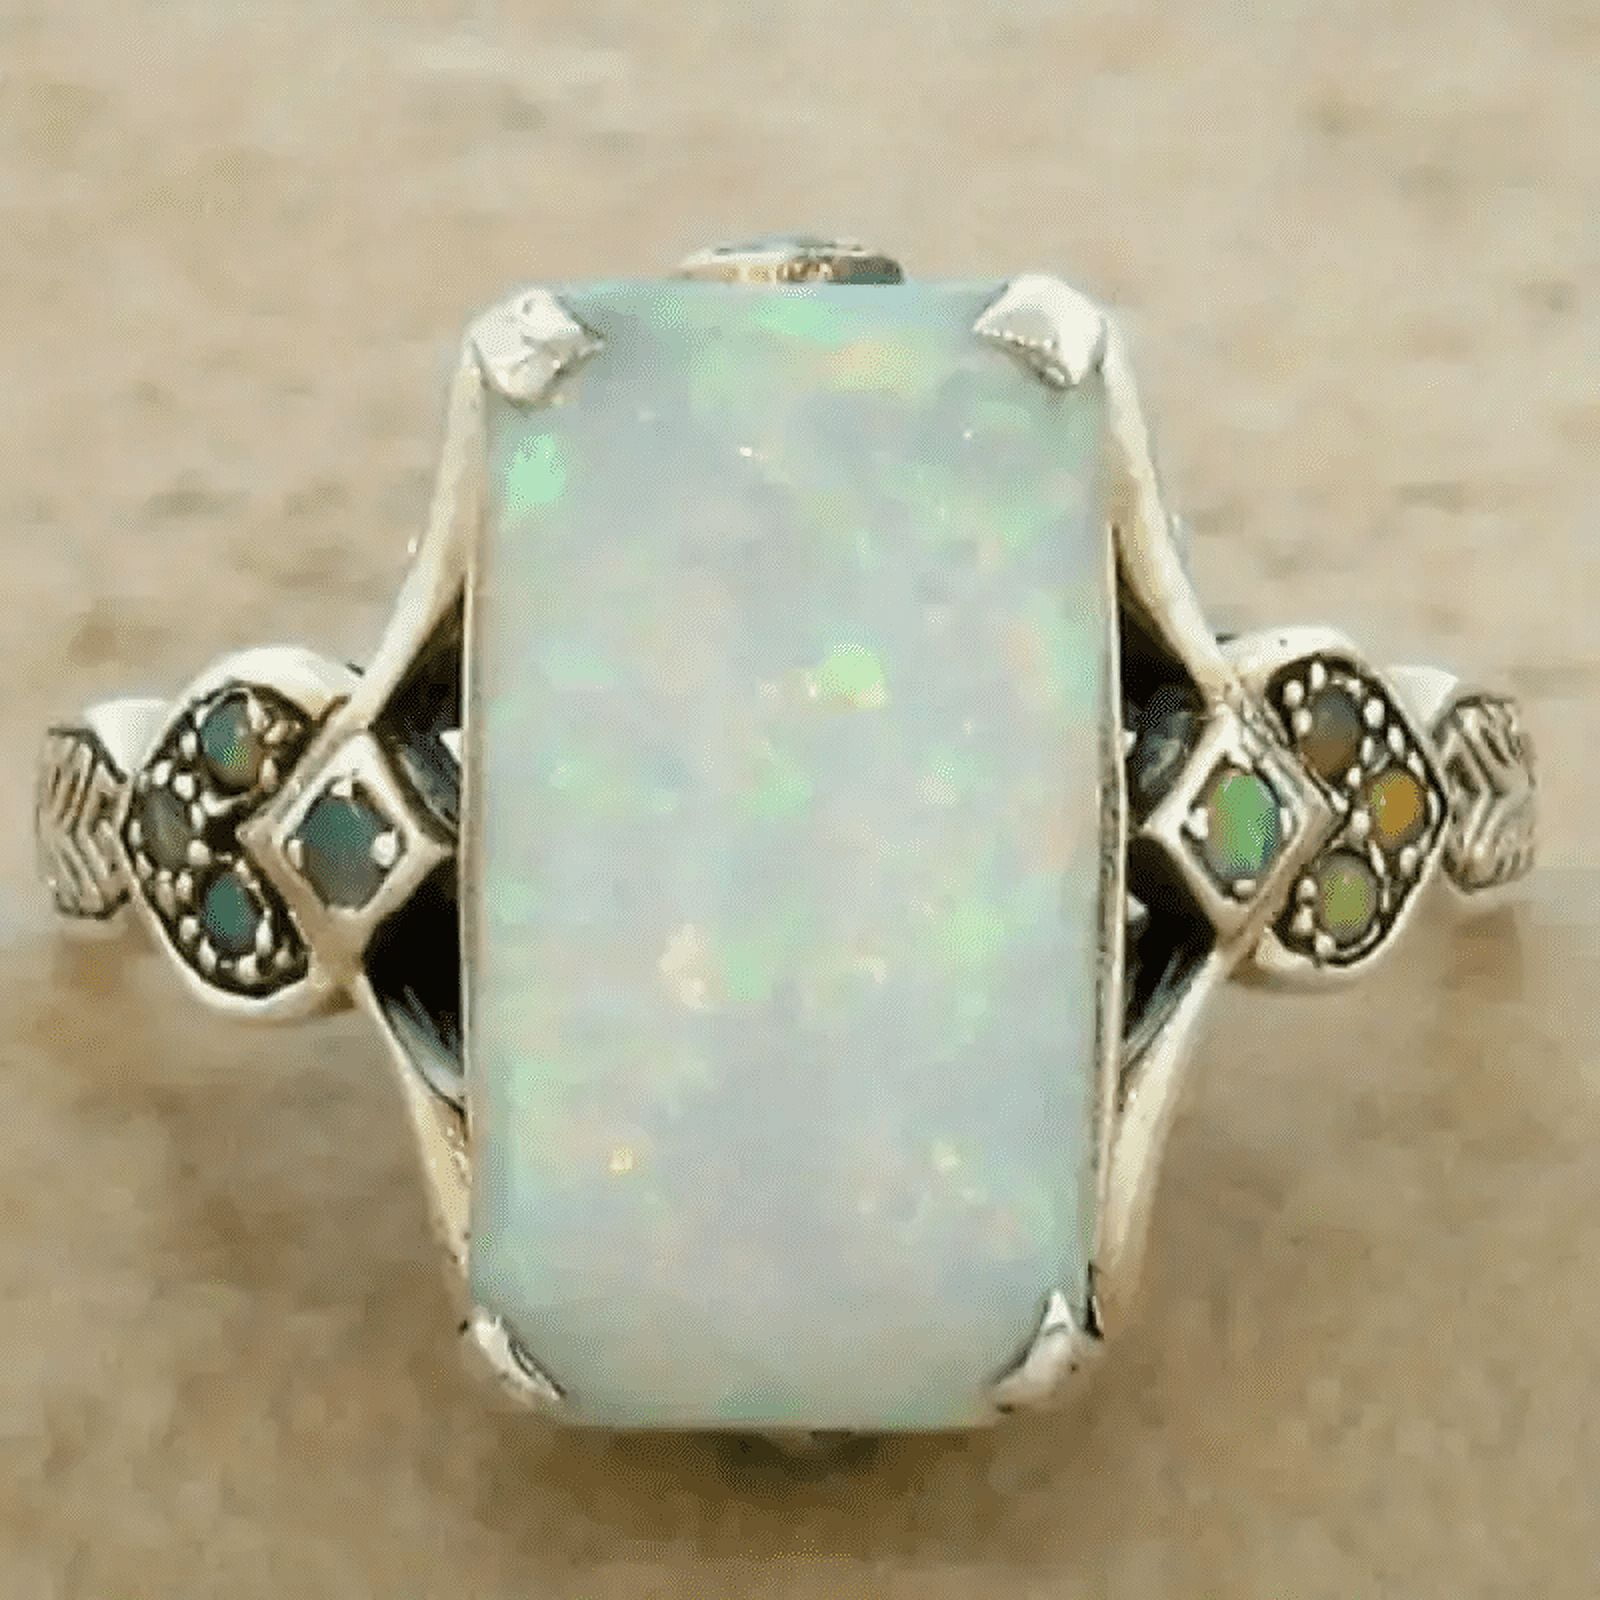 1pc Stylish Vintage Opal Ring for Men - Elegant Square Design with ...